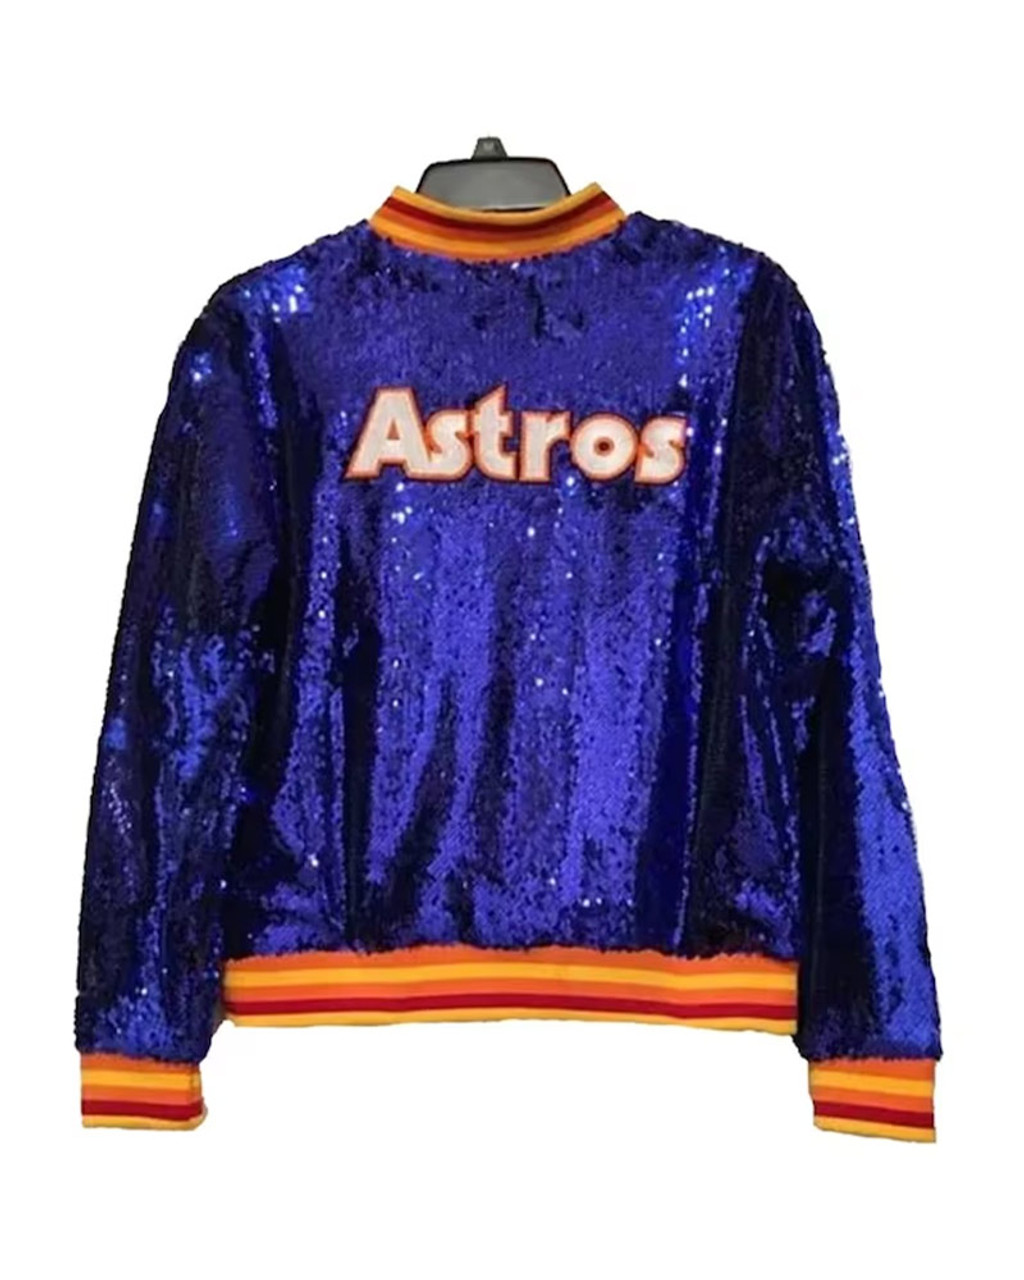 Baseball Team Houston Astros Sequin Jacket